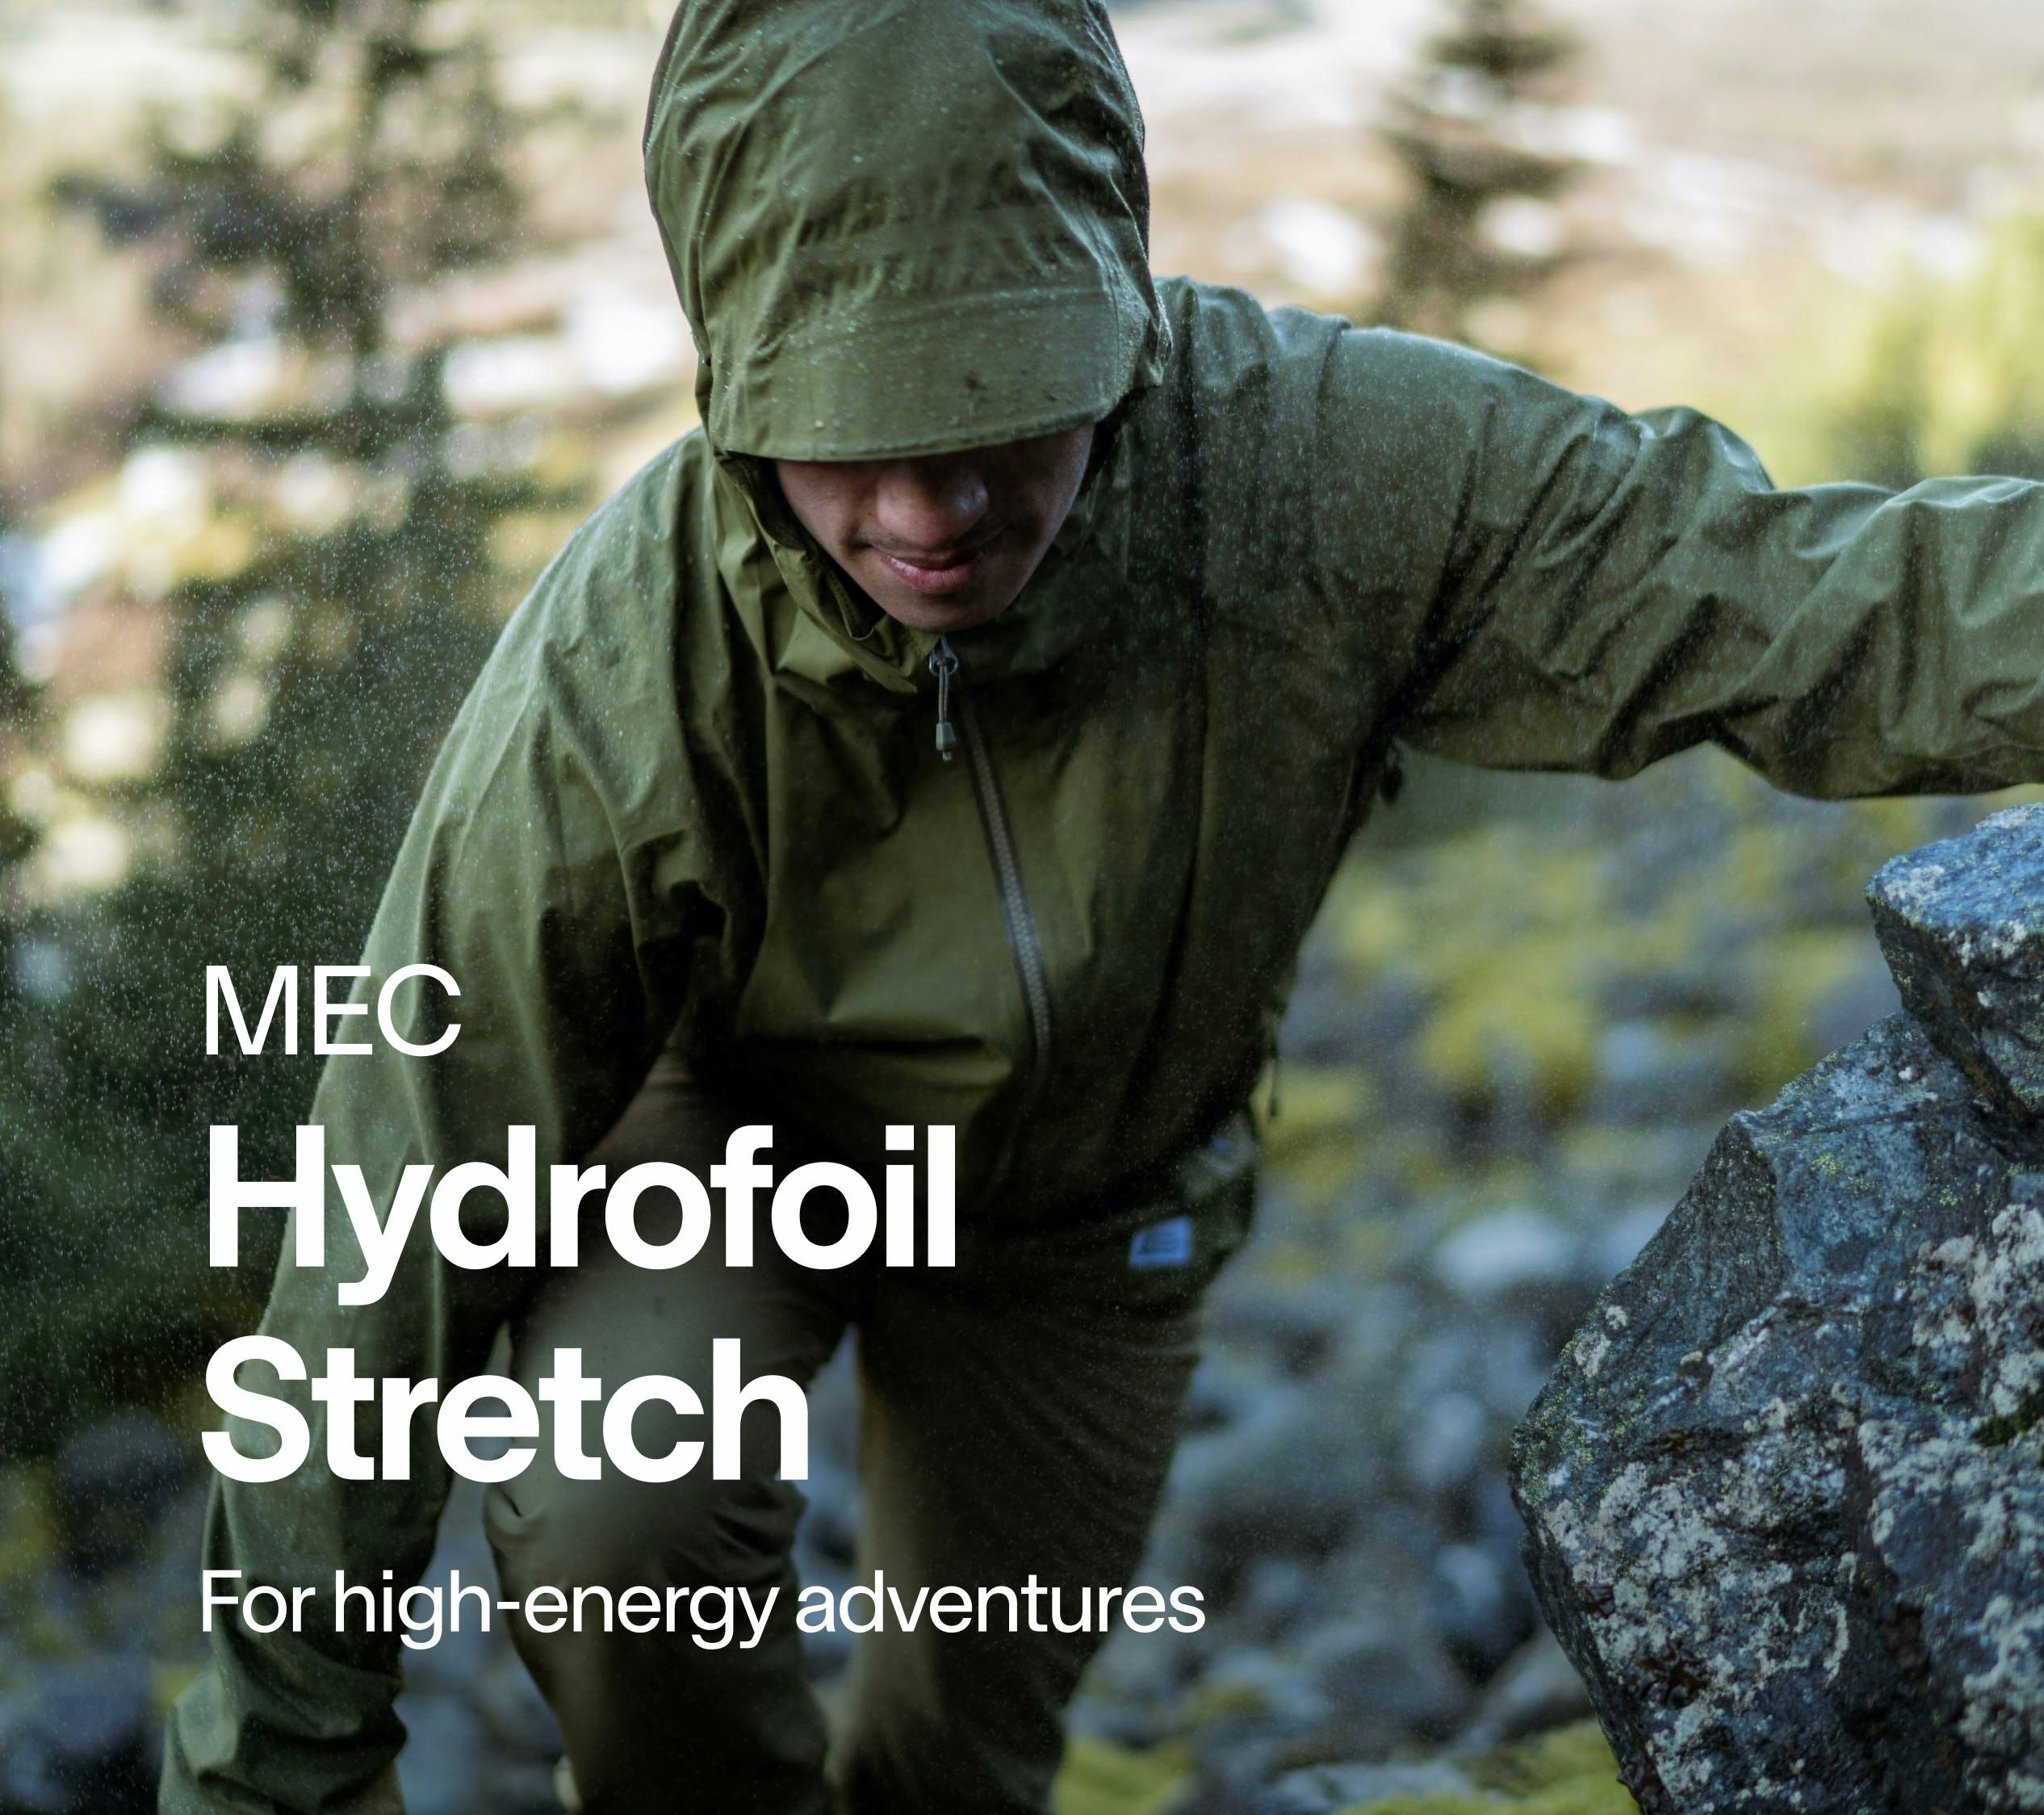 MEC Hydrofoil Stretch   For high-energy adventures 